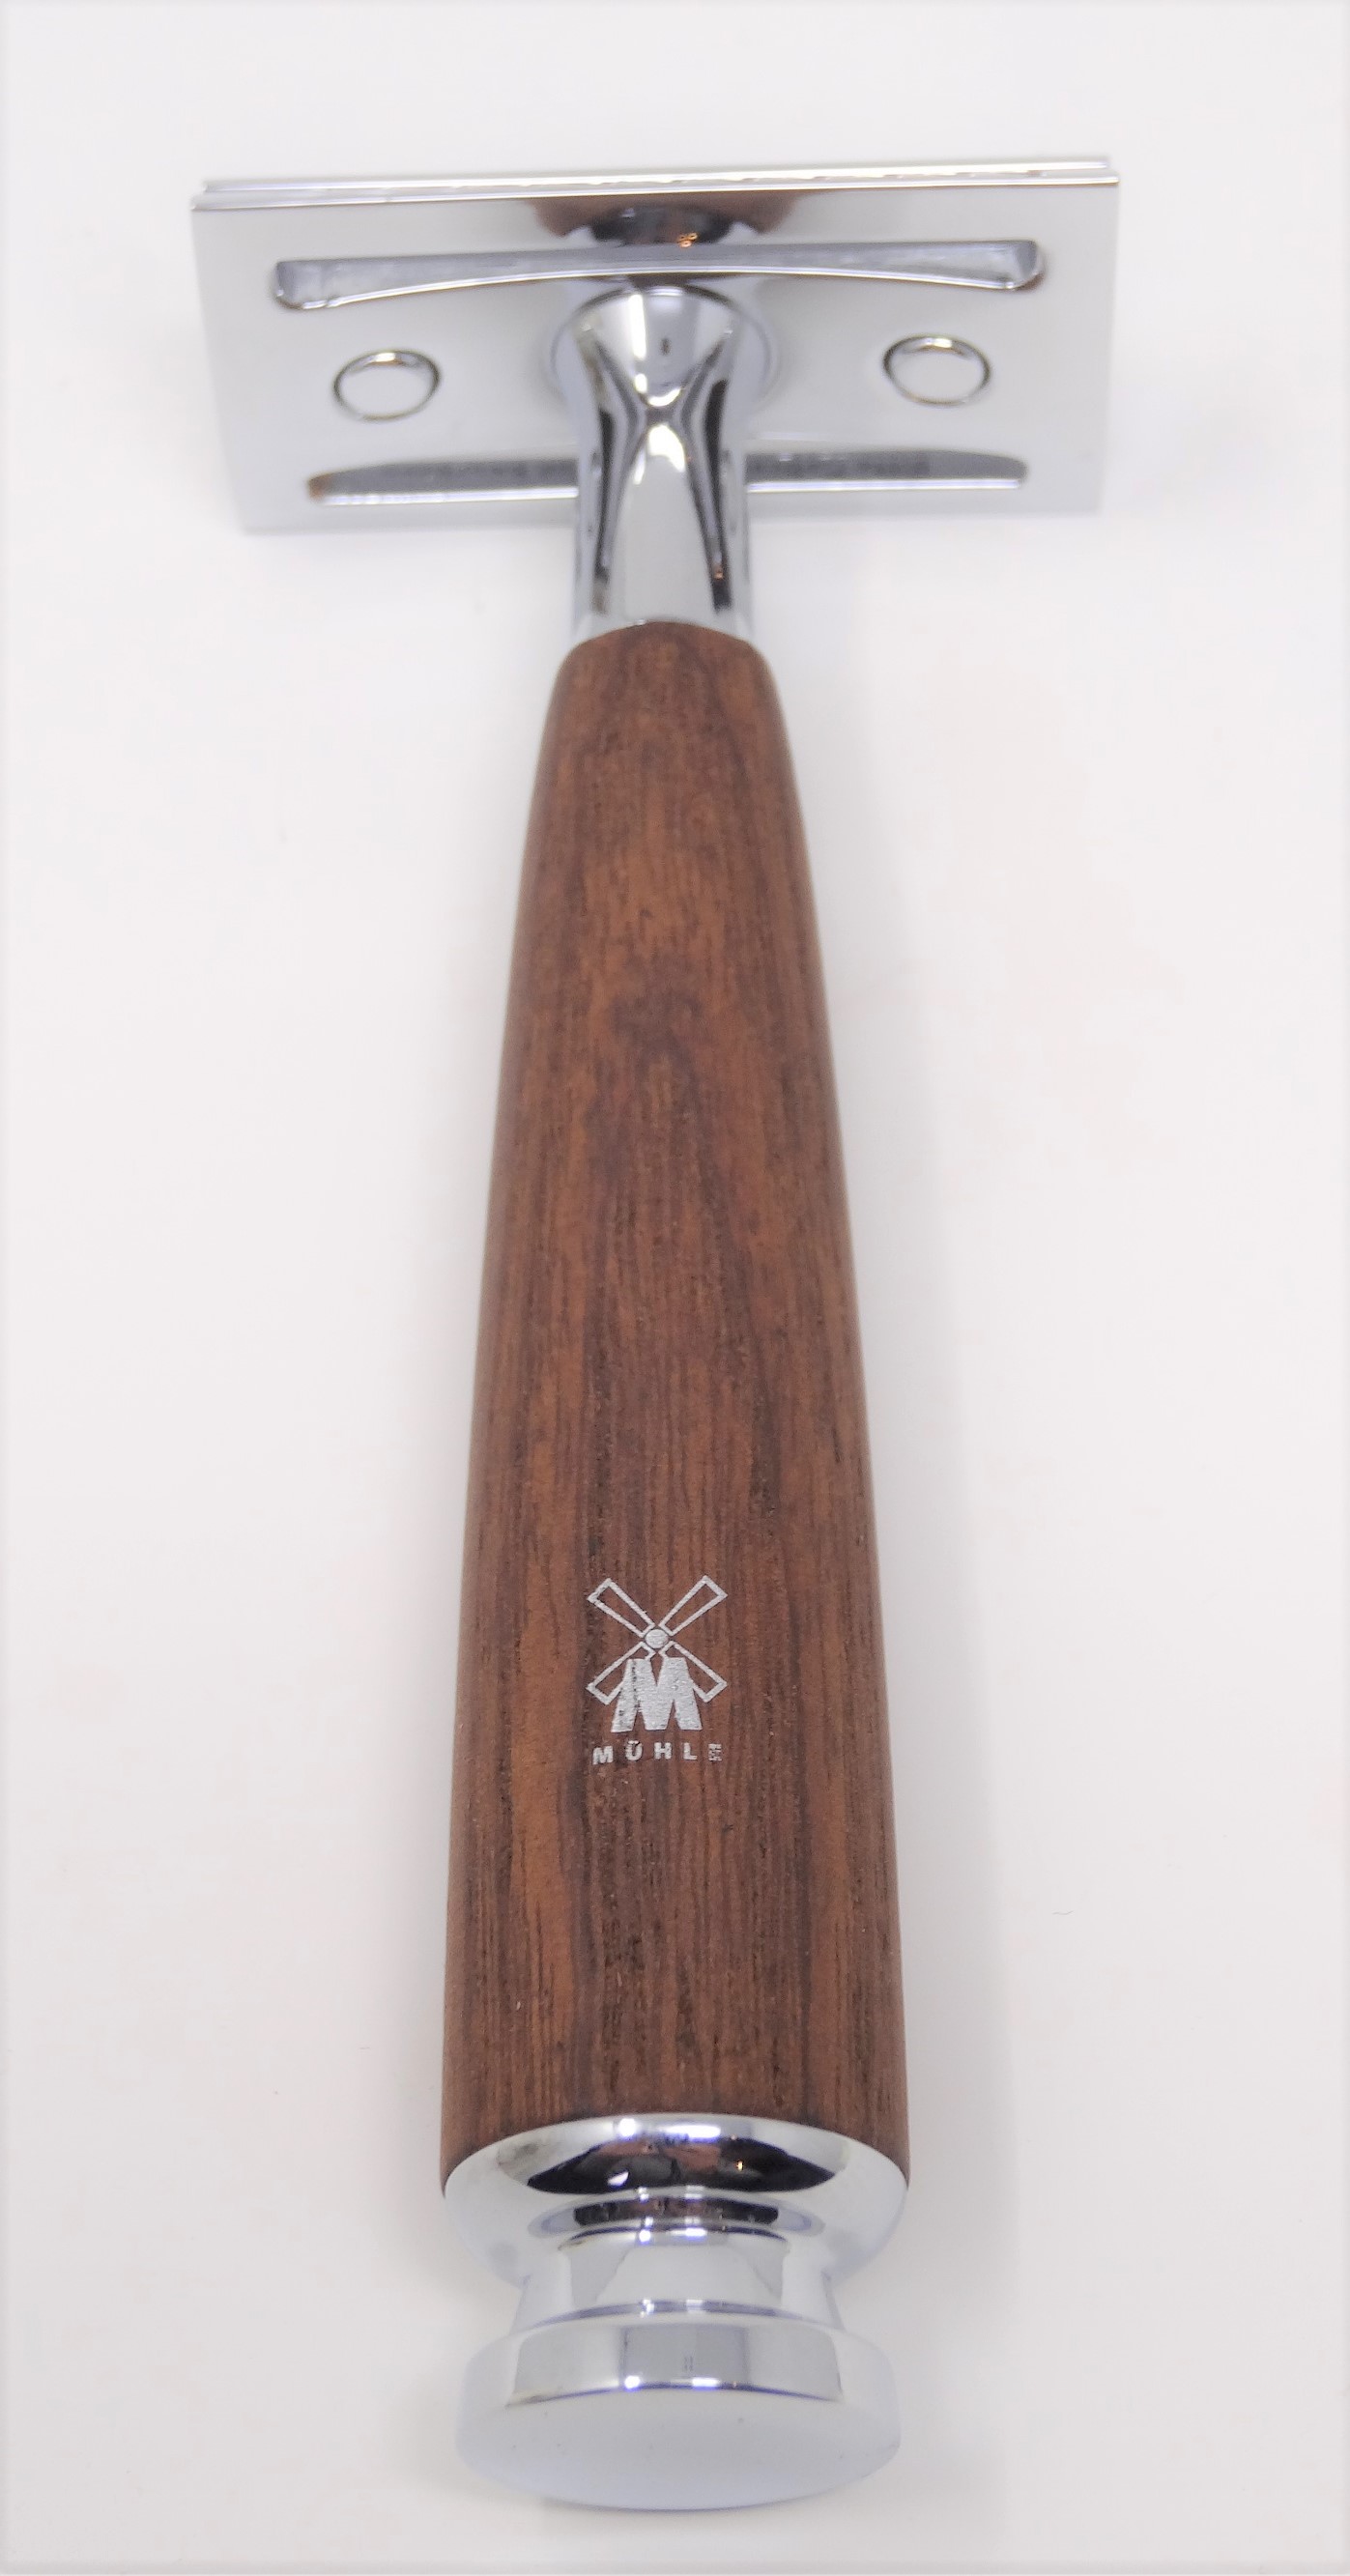 Safty Razor with wooden handle